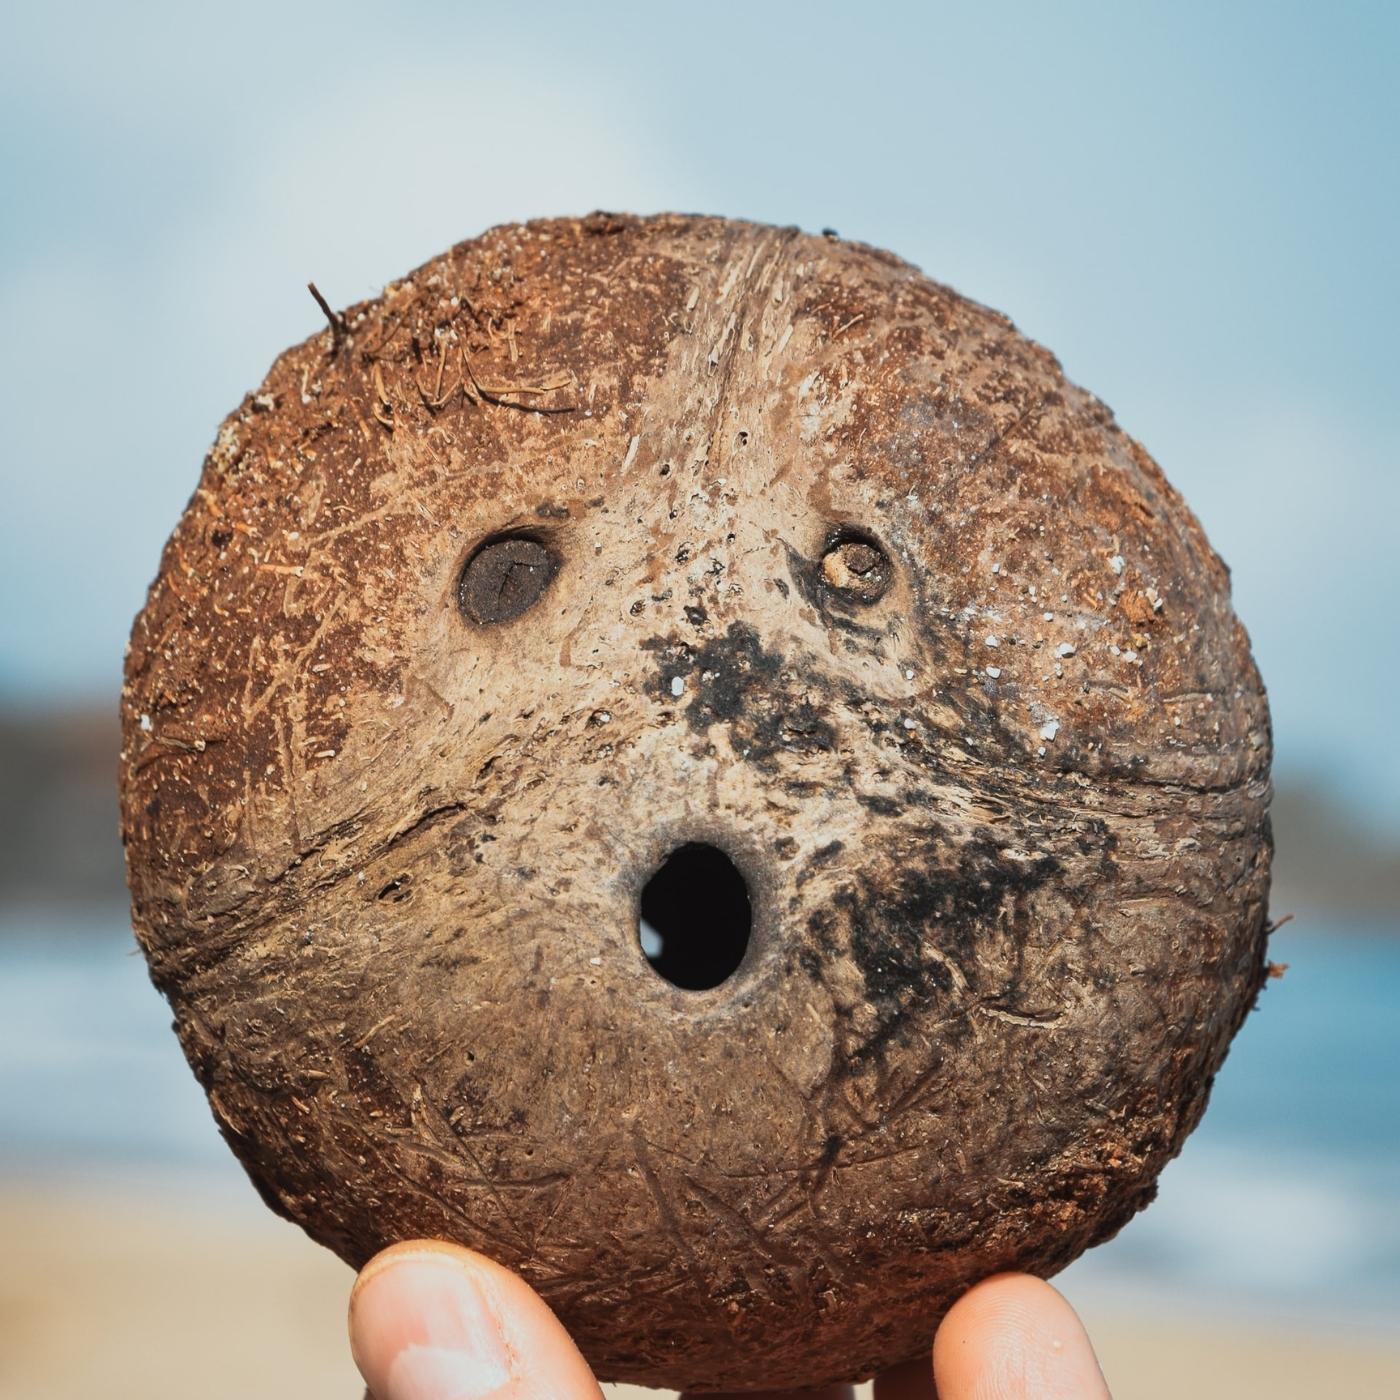 holding-coconut.jpg